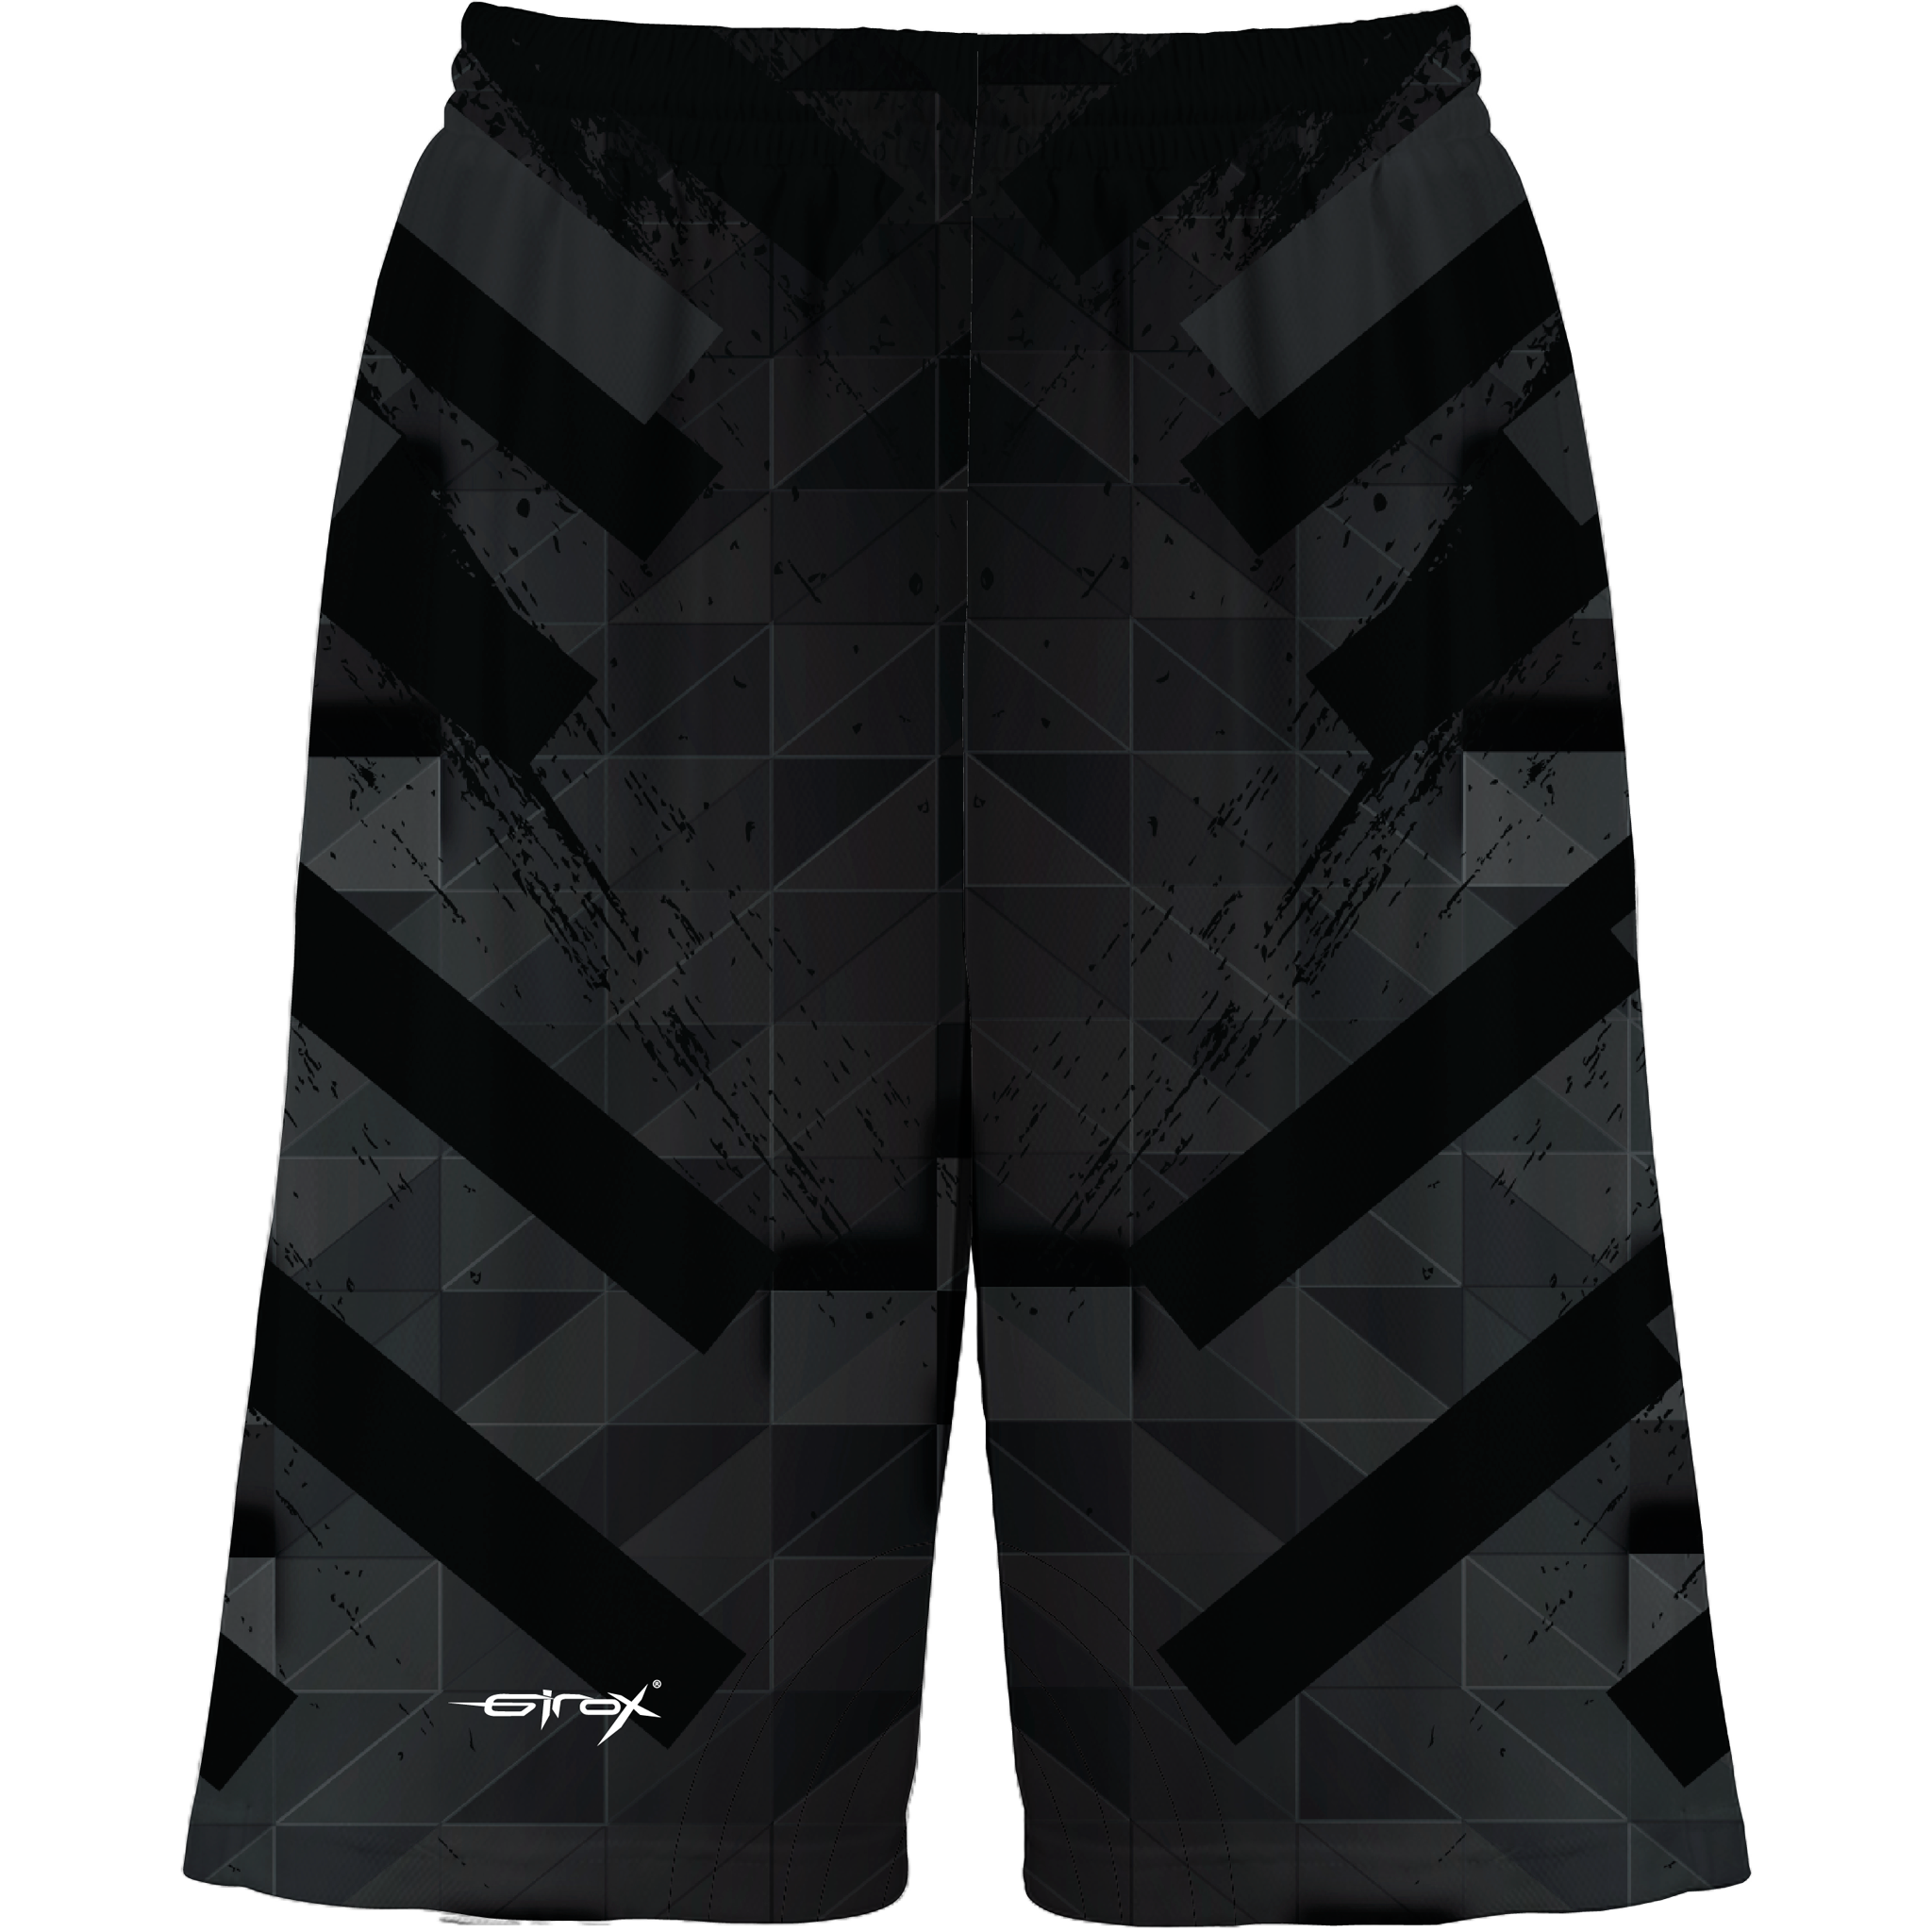 Team Custom Basketball Short - Iron - Girox Sportswear